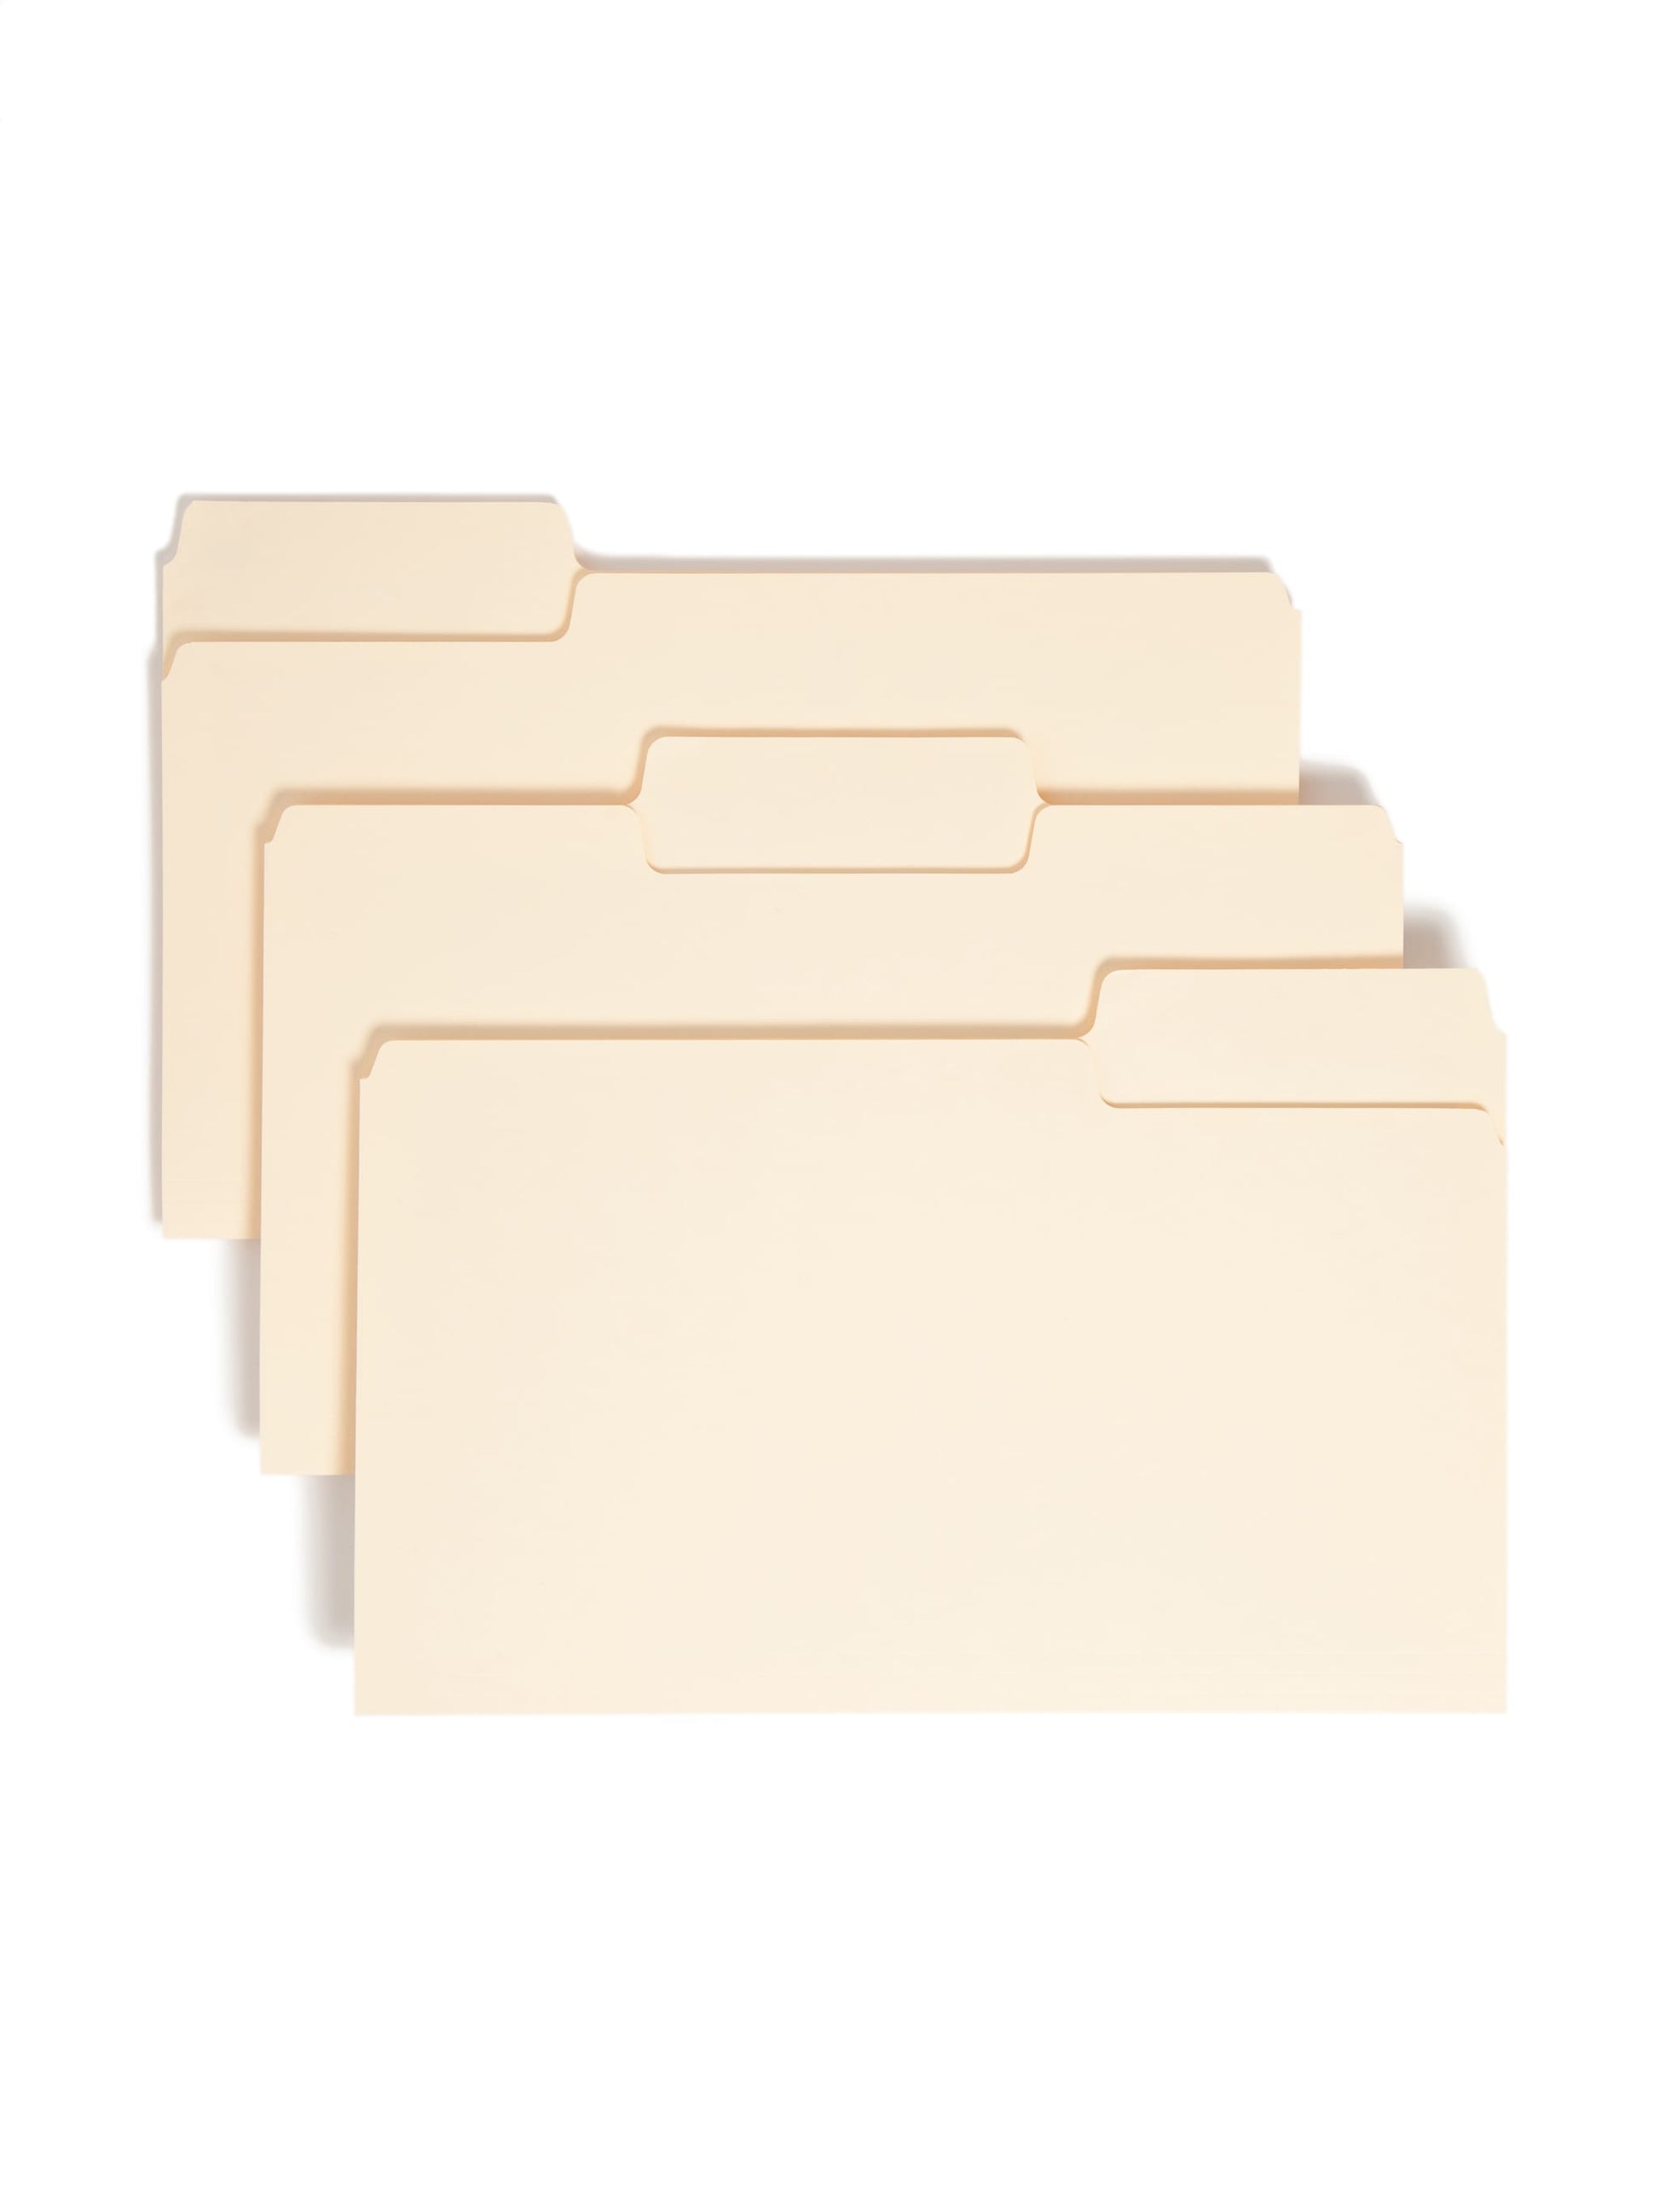 SuperTab® File Folders, 1/3-Cut Tab, Manila Color, Legal Size, Set of 100, 086486153010